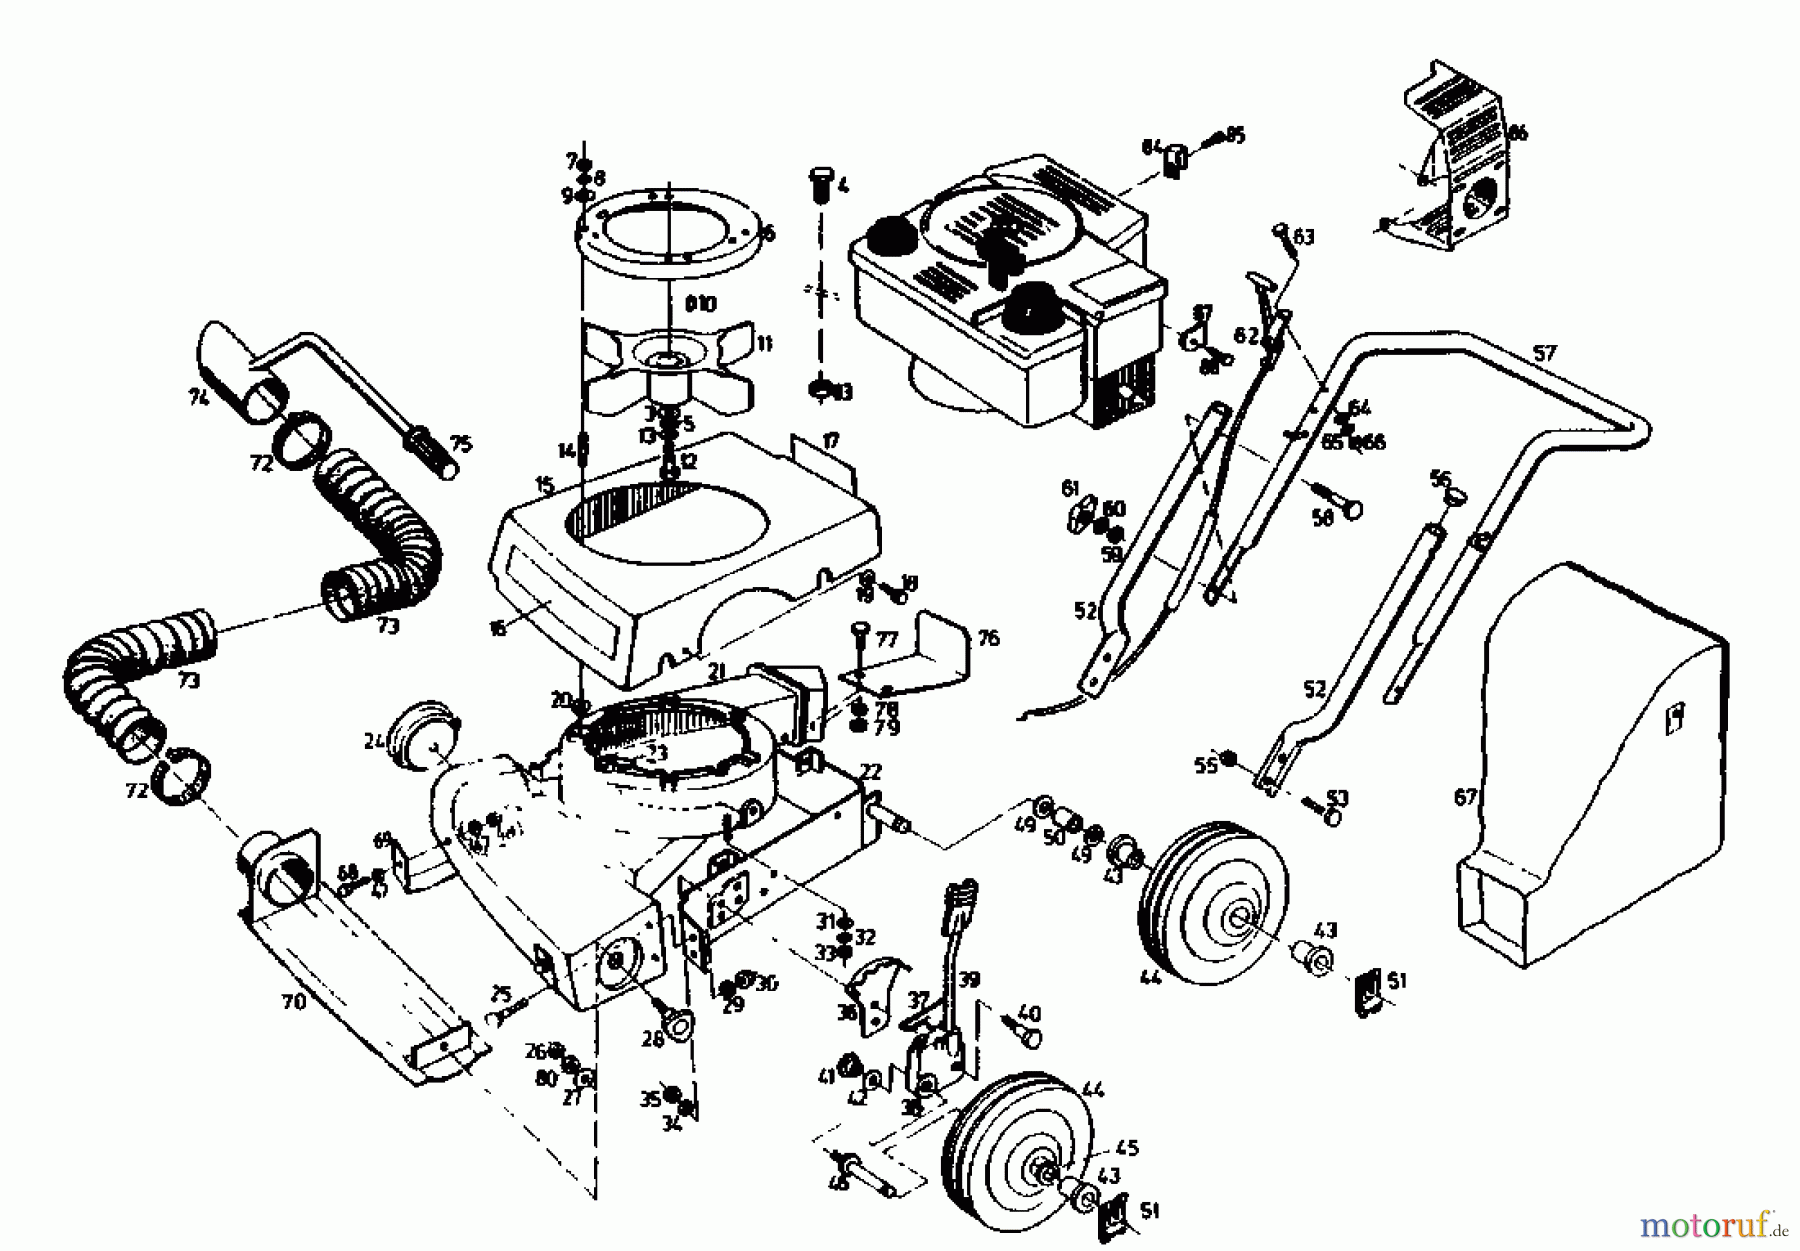  Gutbrod Souffleur de feuille, Aspirateur de feuille LB 55-45 02871.01  (1991) Machine de base